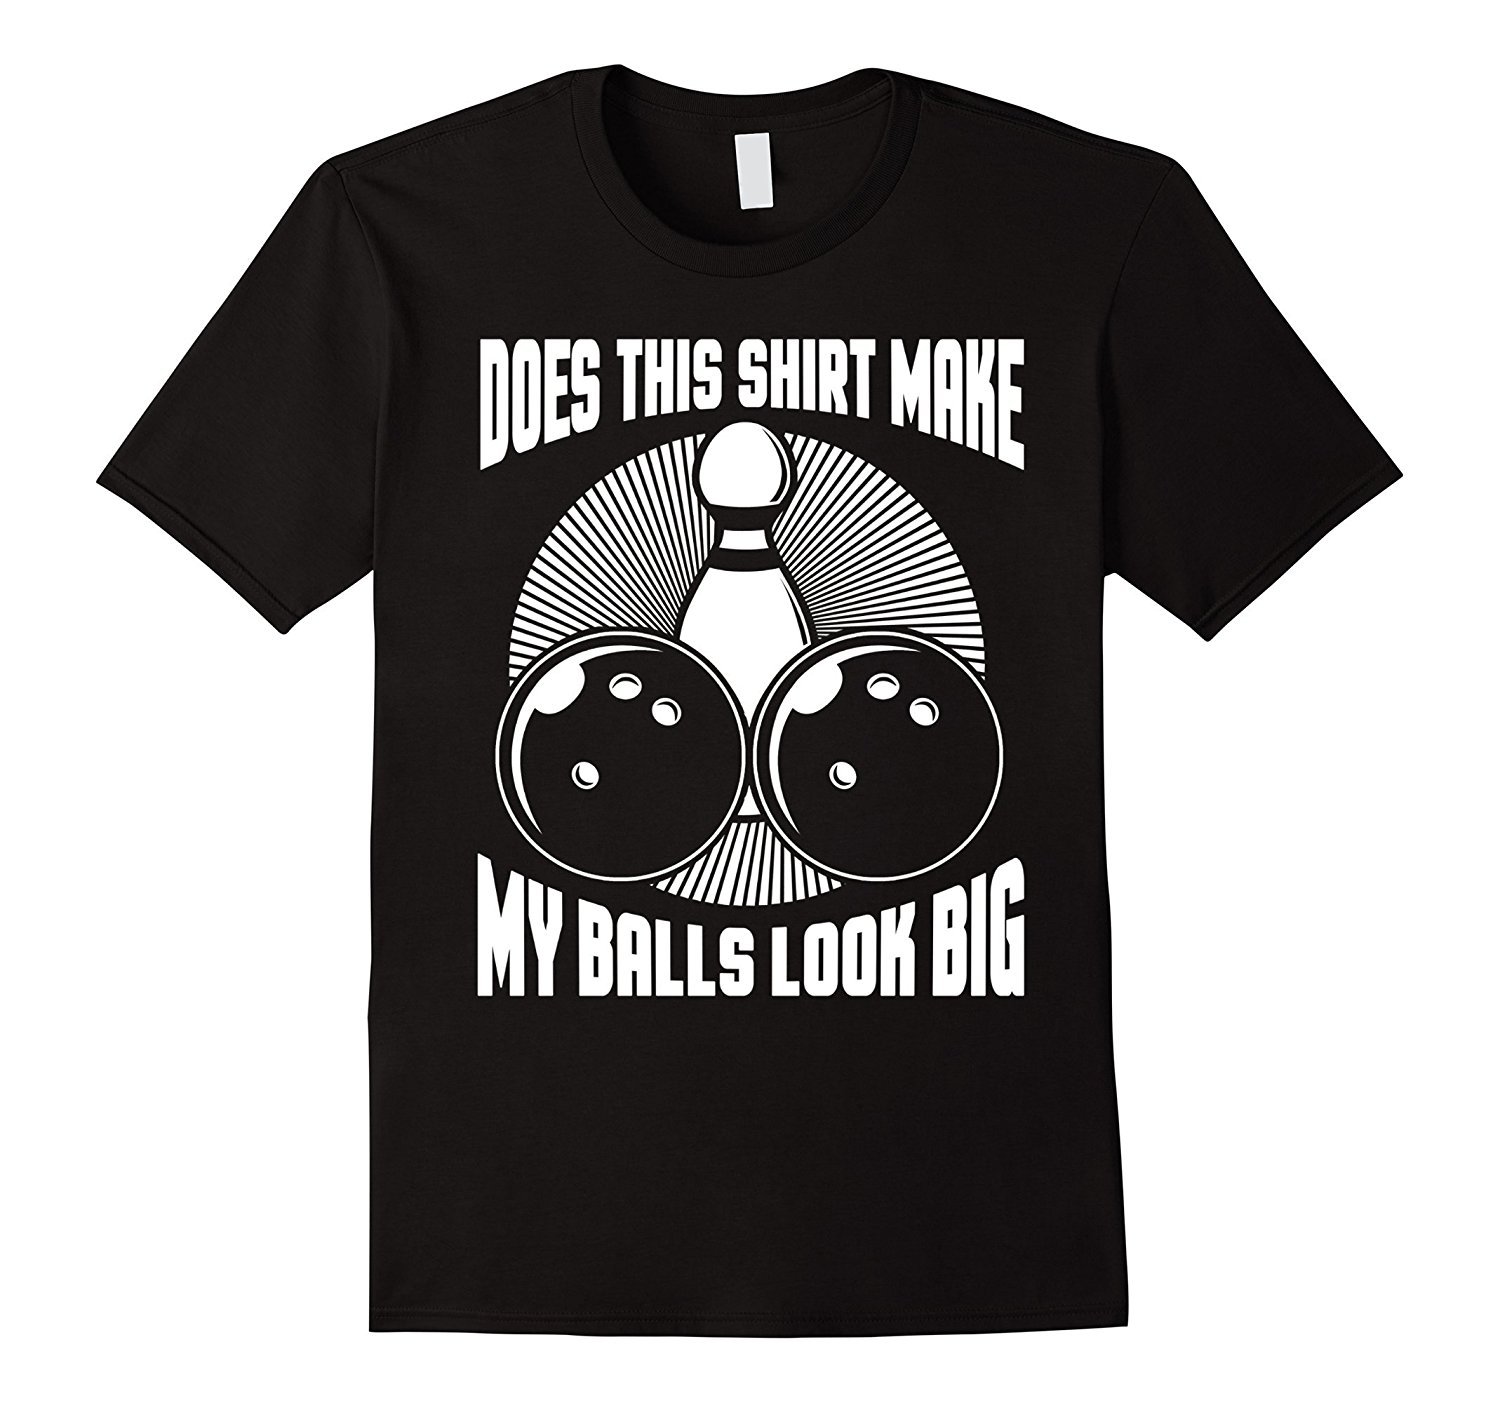 Vintage Bowling Shirts for Men Funny Bowling Balls